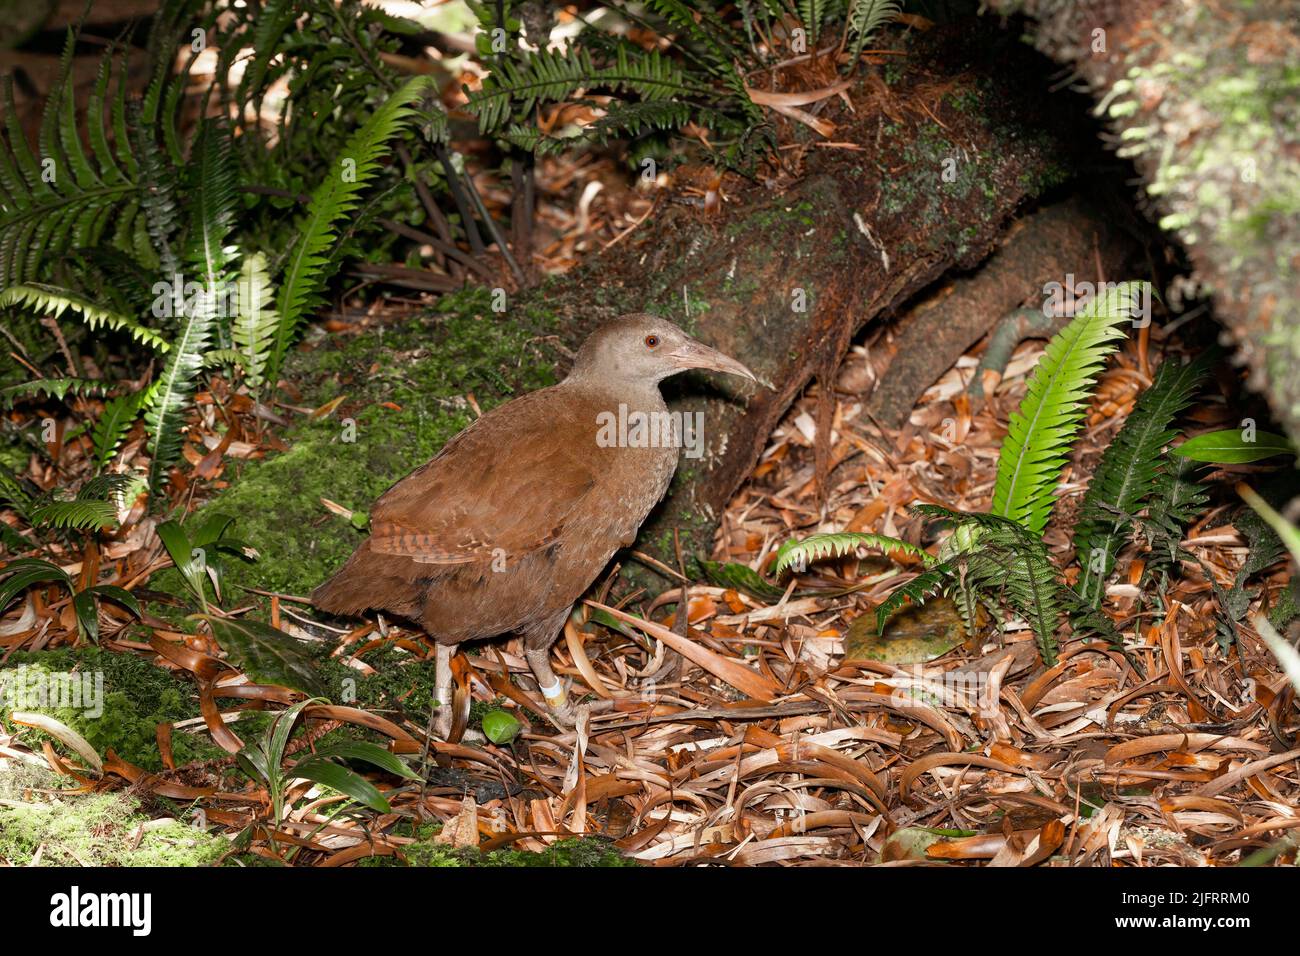 Lord Howe Island Woodhen (Tricholimnas sylvestris) Flightless Endemic to Lord Howe Island, Australia. Endangered species., Credit:Robin Bush / Avalon Stock Photo